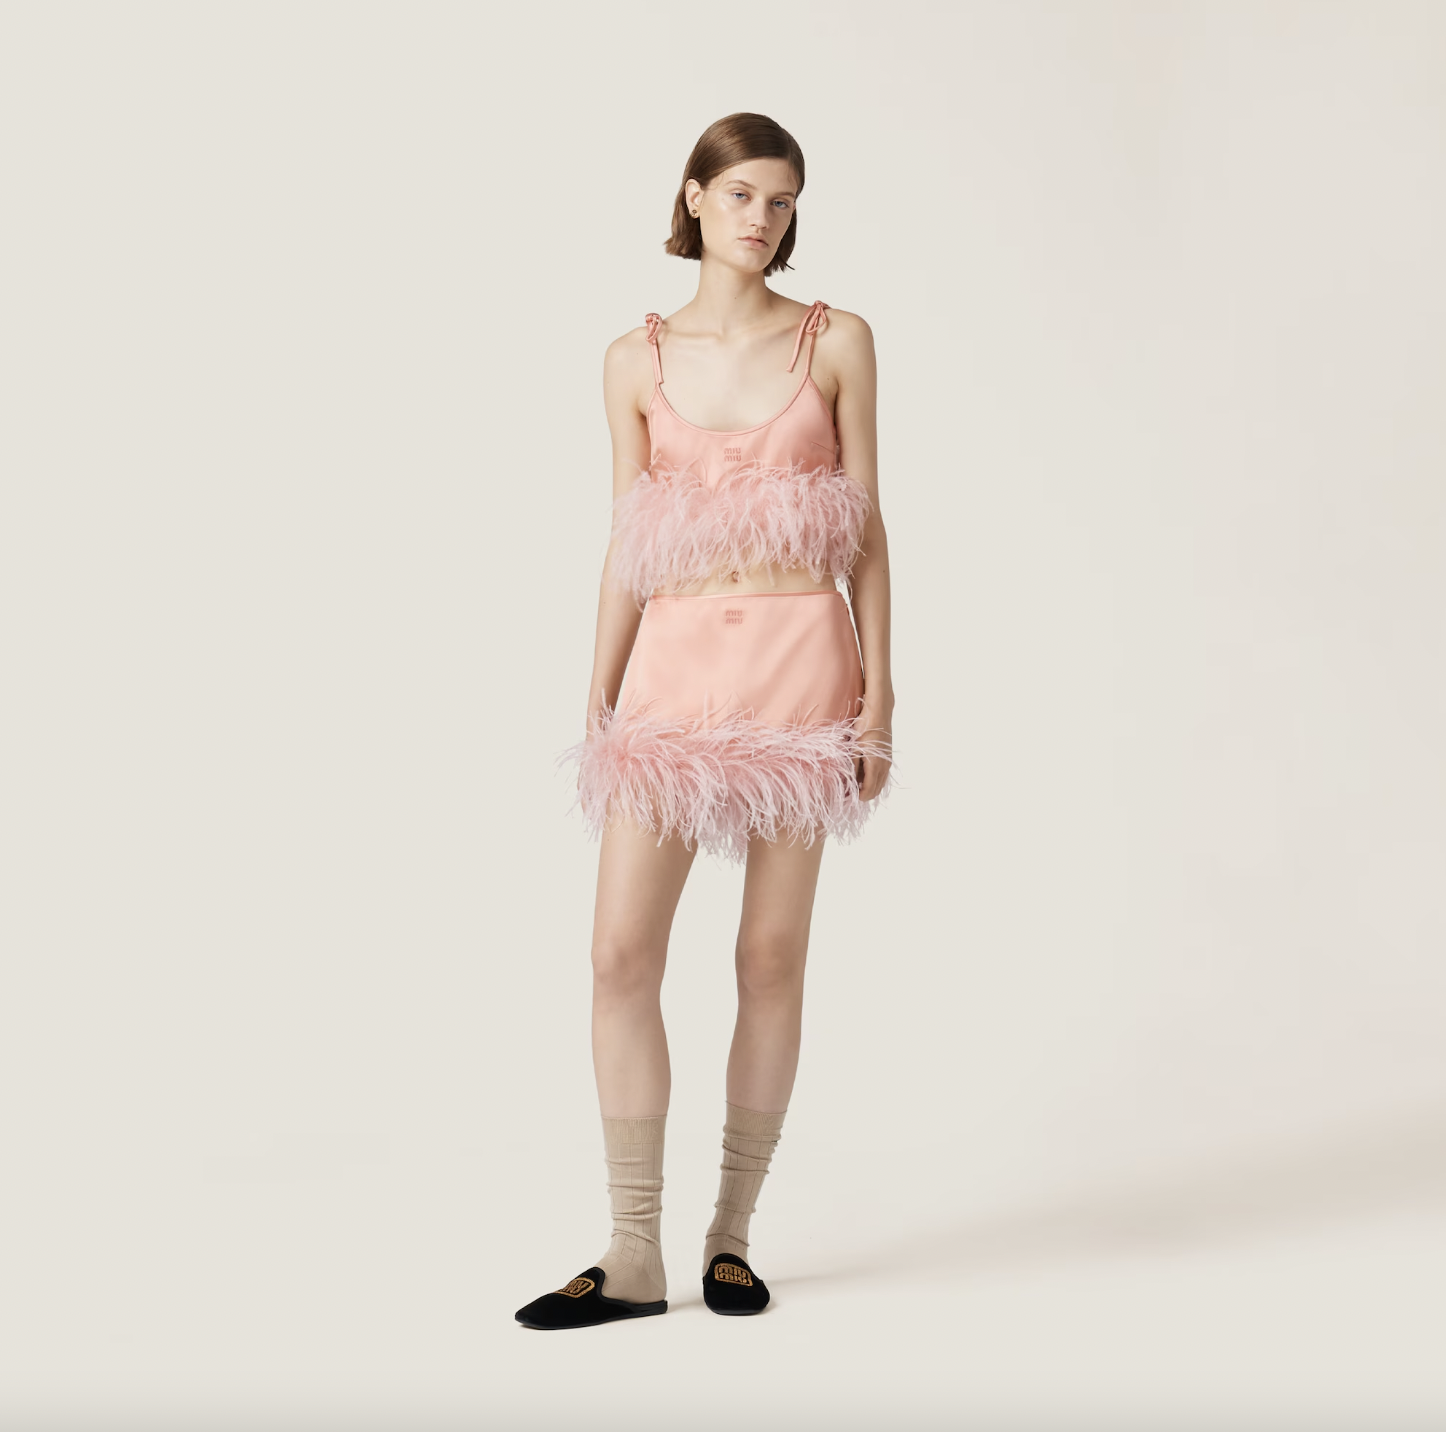 Miu-Miu Feather-trimmed satin miniskirt in Coral ($ 2,750)